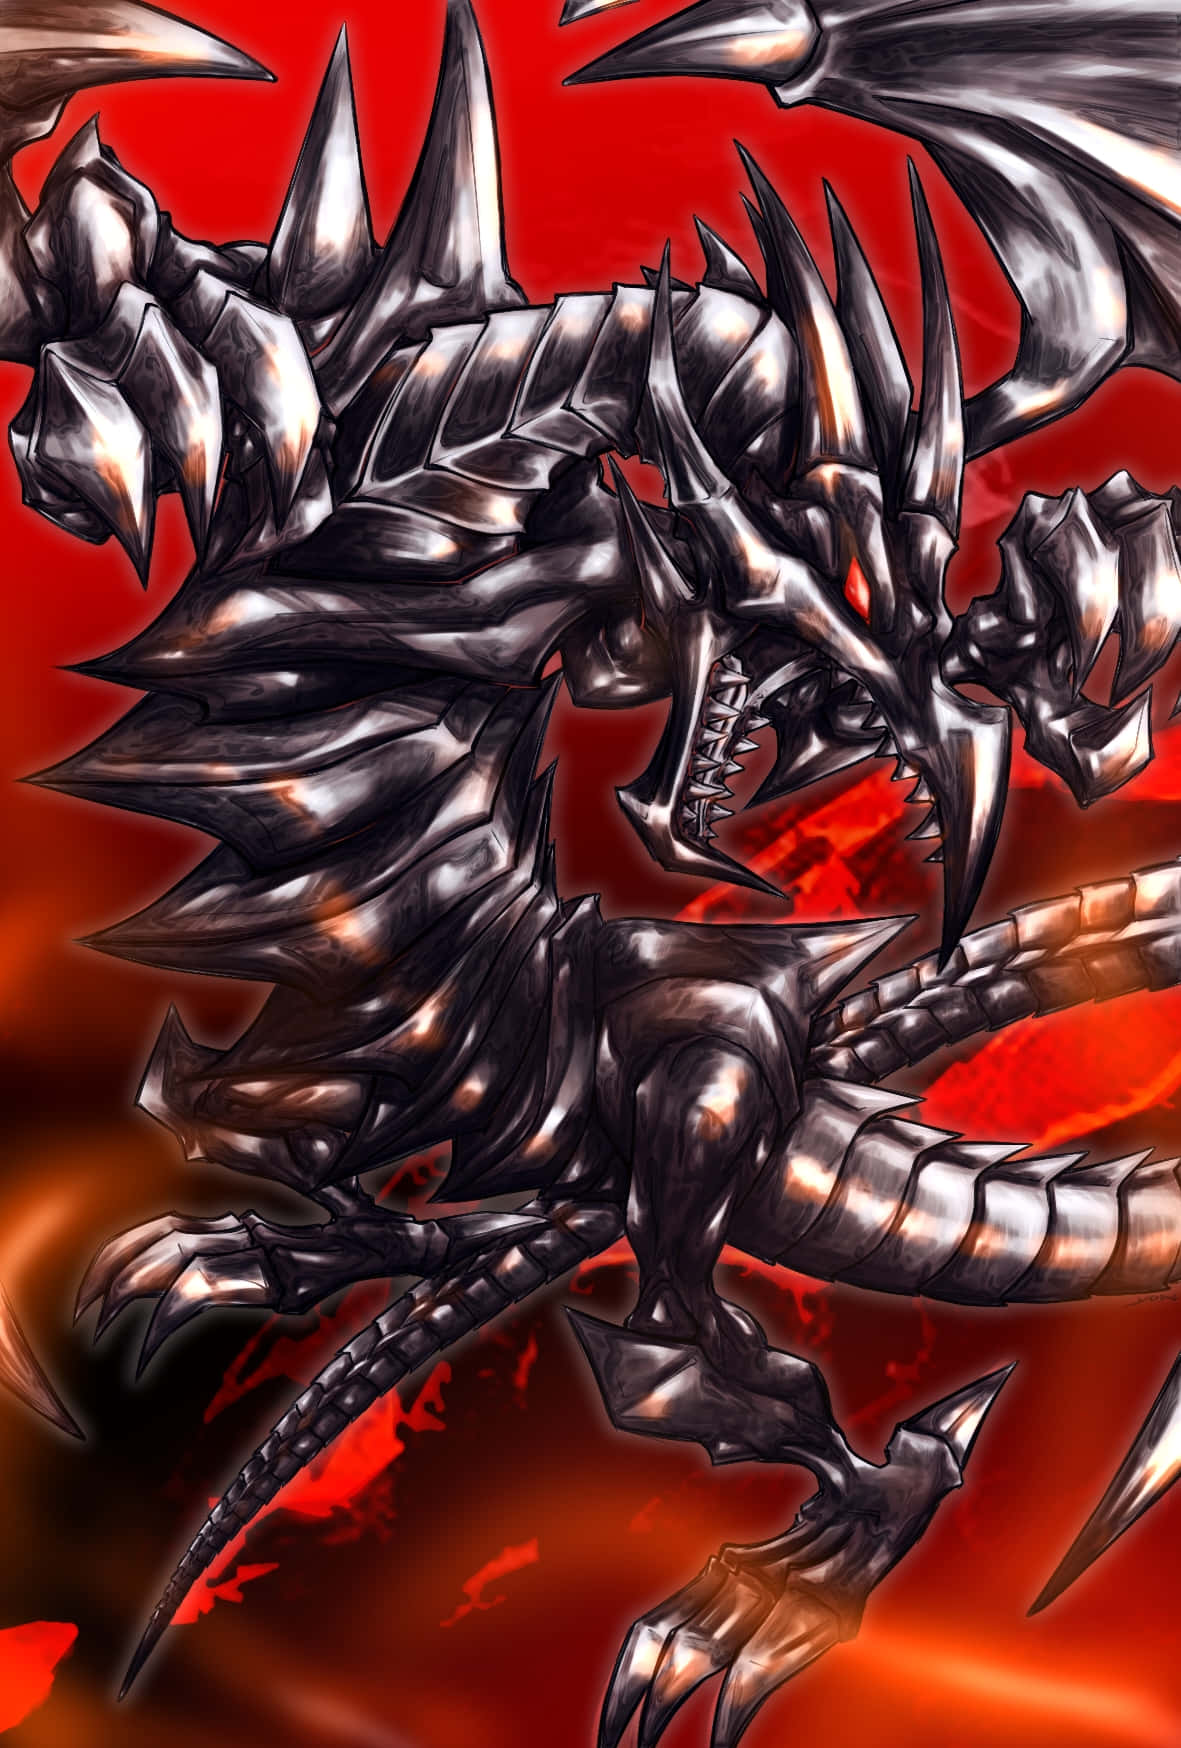 Astonishing YuGiOh Dragons showcase their power Wallpaper